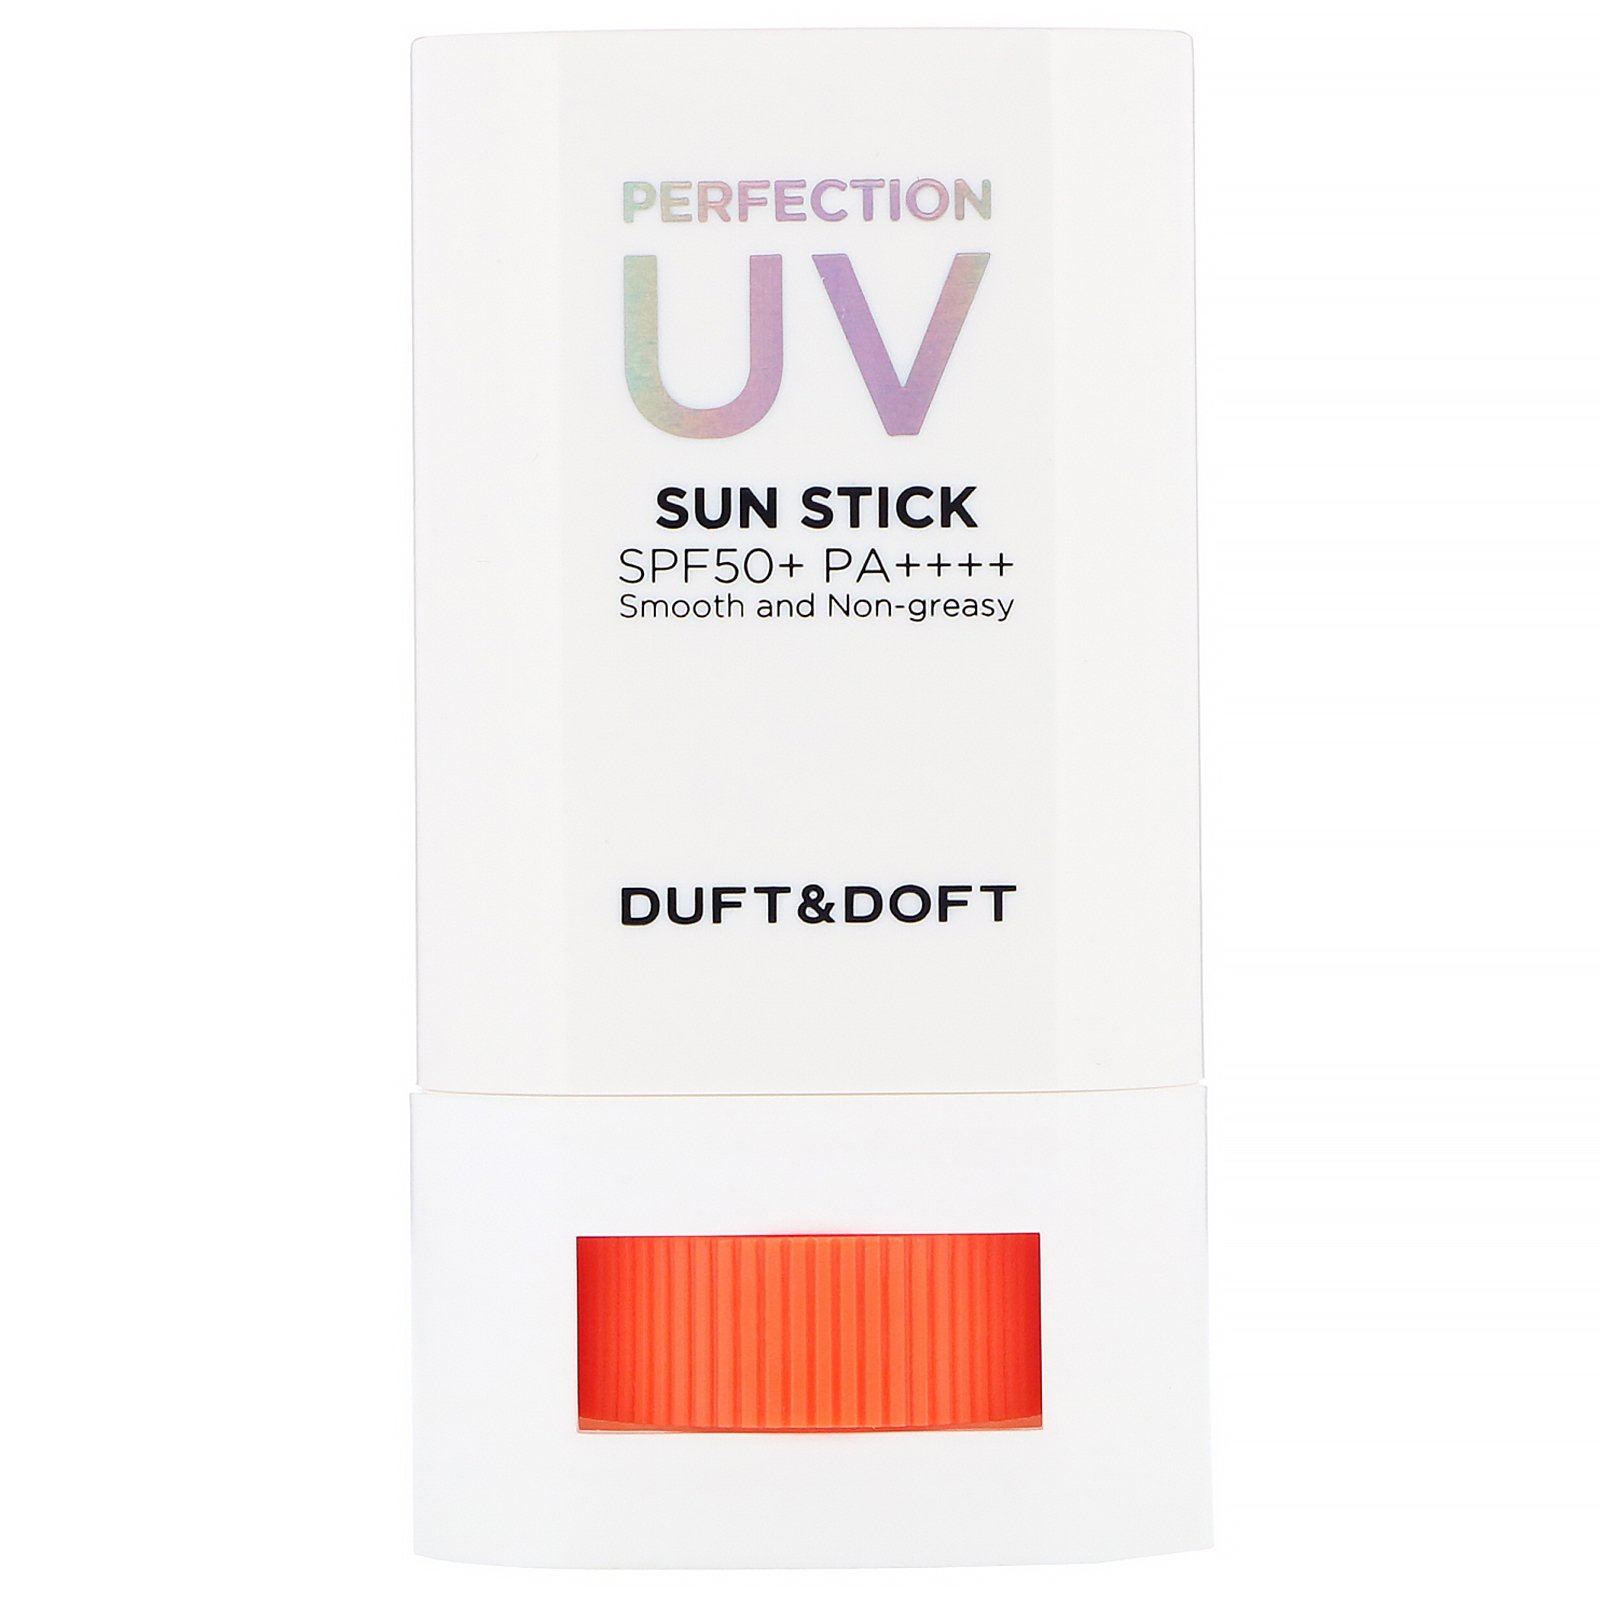 Duft & Doft UV Perfection, Sun Stick, SPF 50+ Pa++++